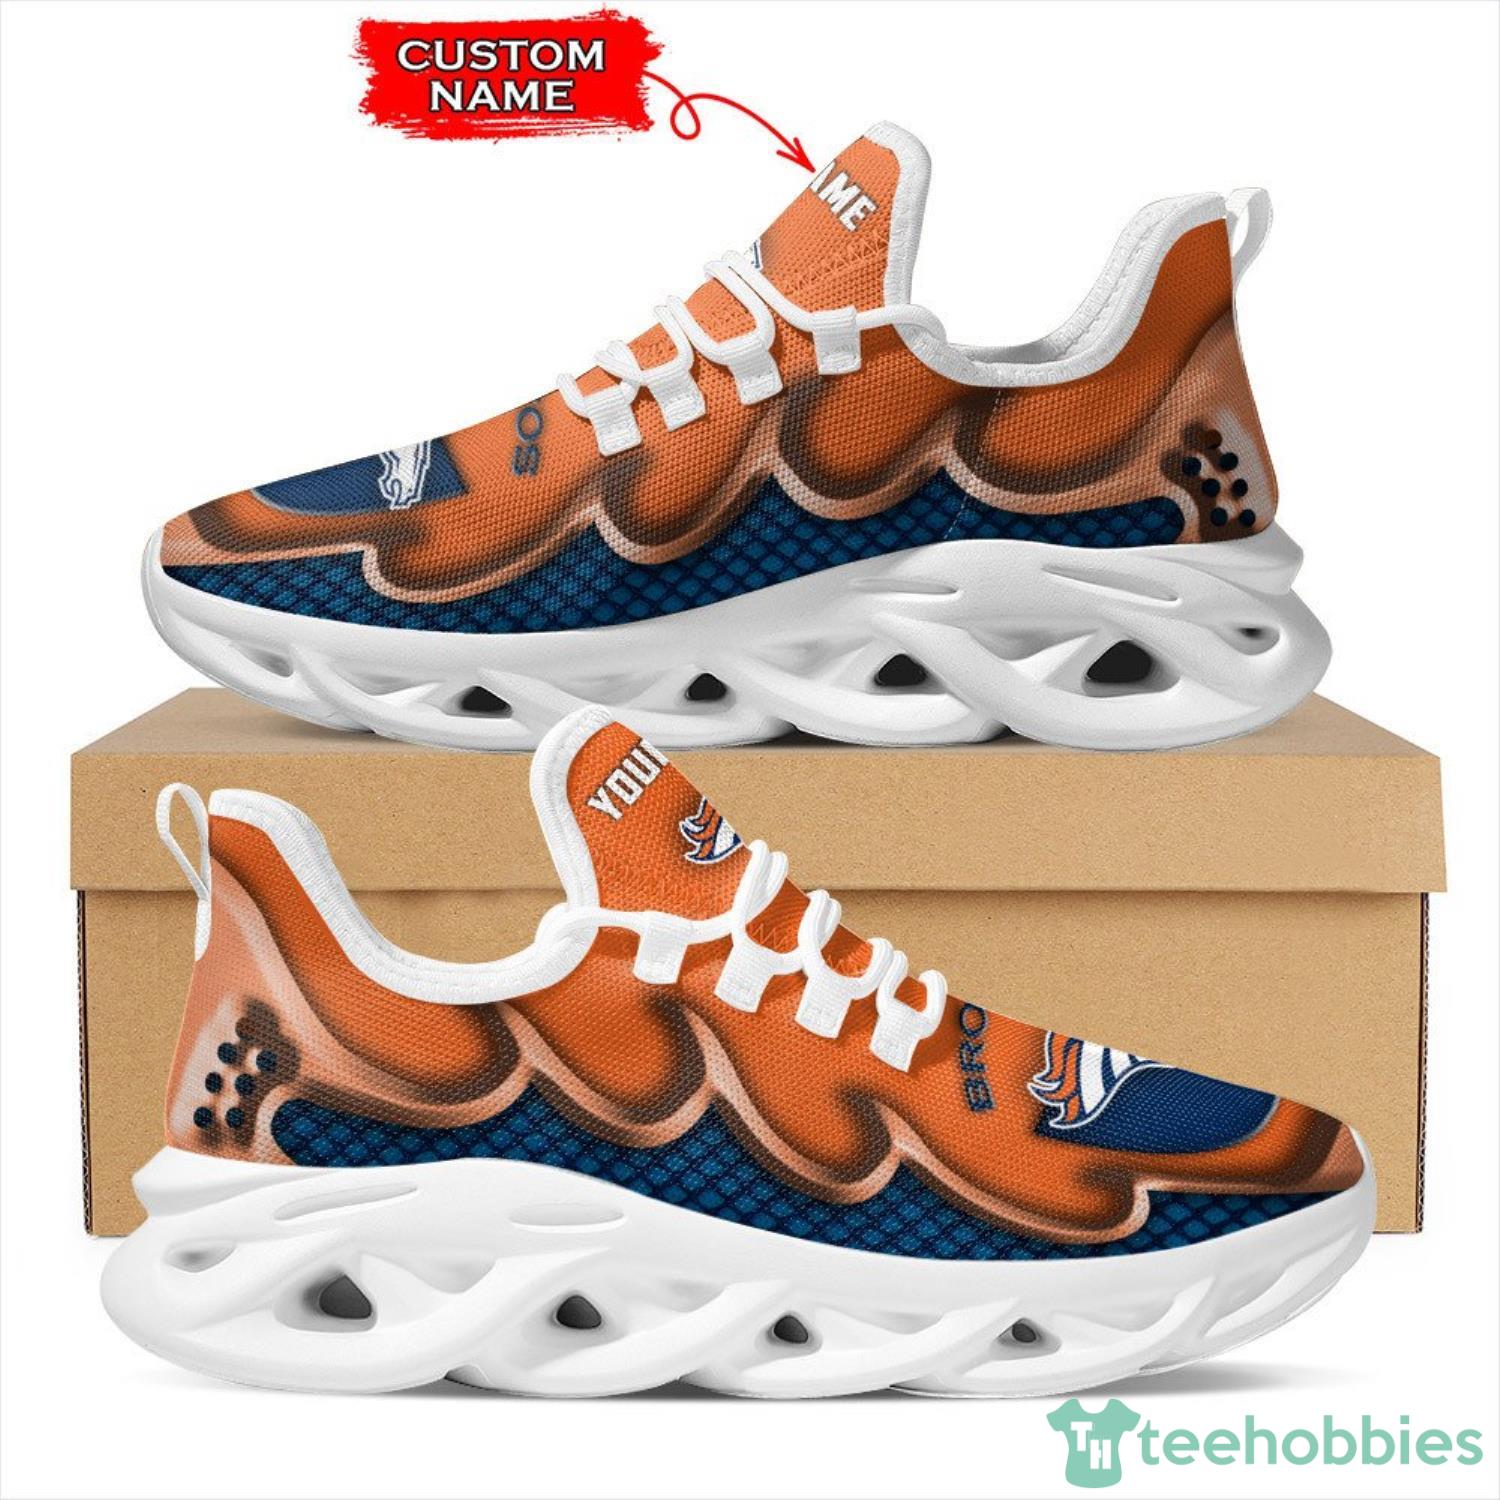 NFL Denver Broncos CUstom Name Max Soul Shoes Product Photo 1